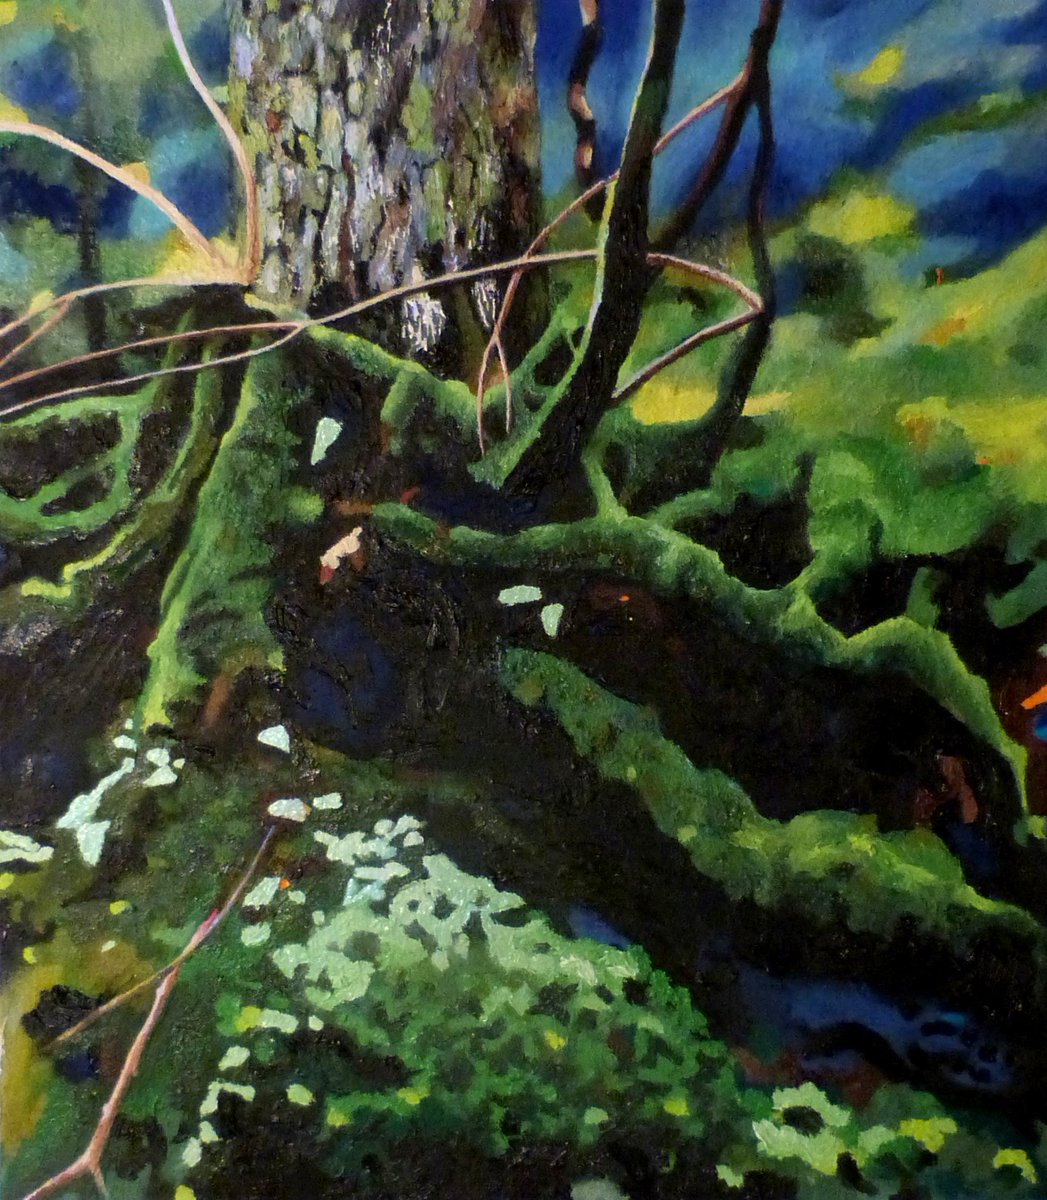 Albert Lascaux 'Black Creek'  Painting 2009 

#ArtisticExpression #OilPainting #CanvasArt #ContemporaryArt #FineArt #ArtisticJourney #ArtCollectors #ArtGallery #ArtLovers #ModernArt #ArtisticVision #ArtWorld #ArtOfTheDay #ContemporaryPainting